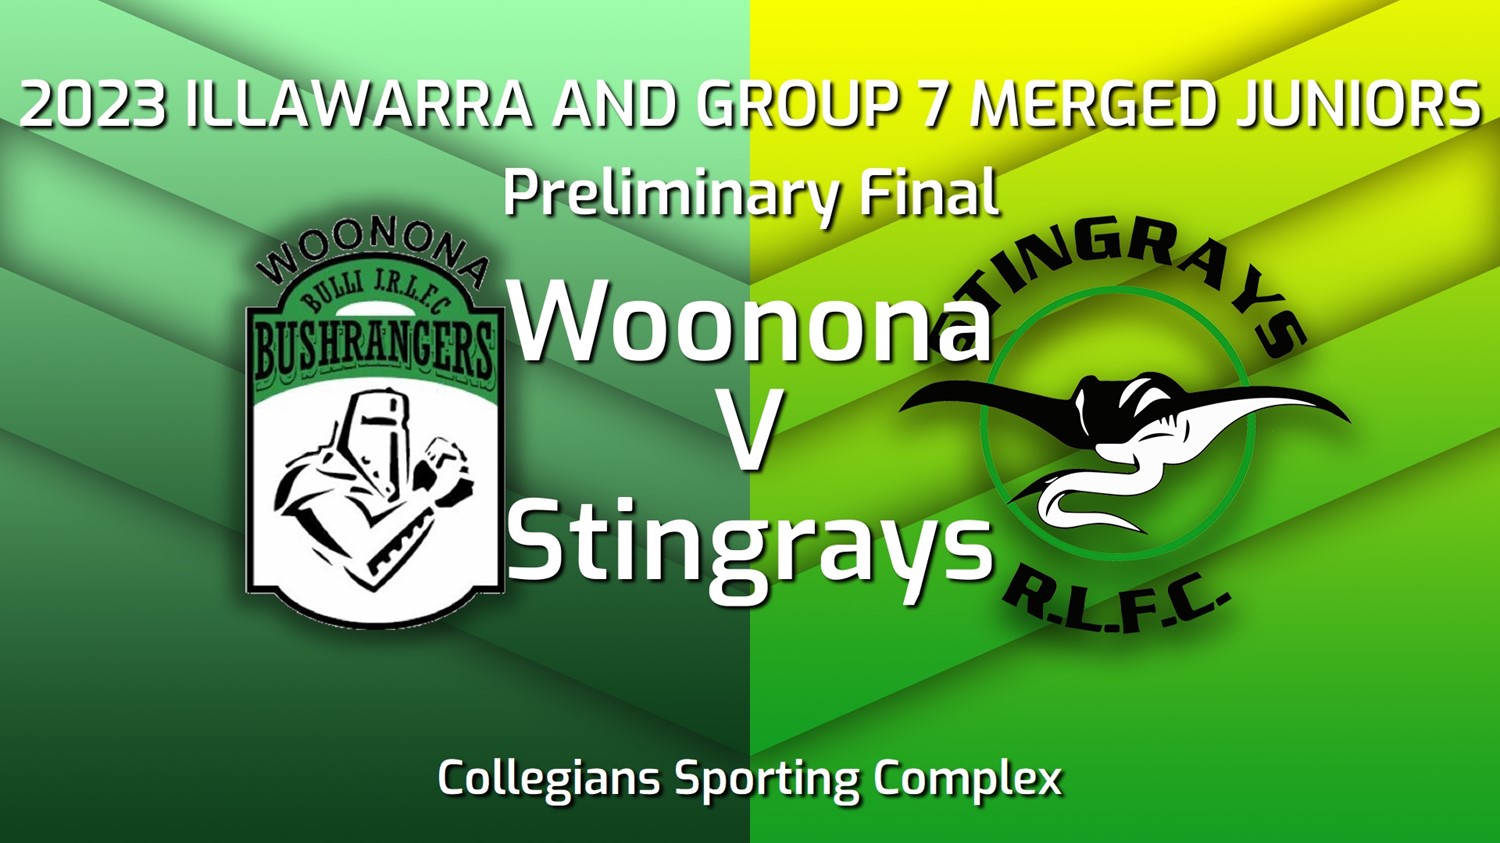 230901-Illawarra and Group 7 Merged Juniors Preliminary Final - U14 Div 1 - Woonona Bushrangers v Stingrays of Shellharbour Minigame Slate Image